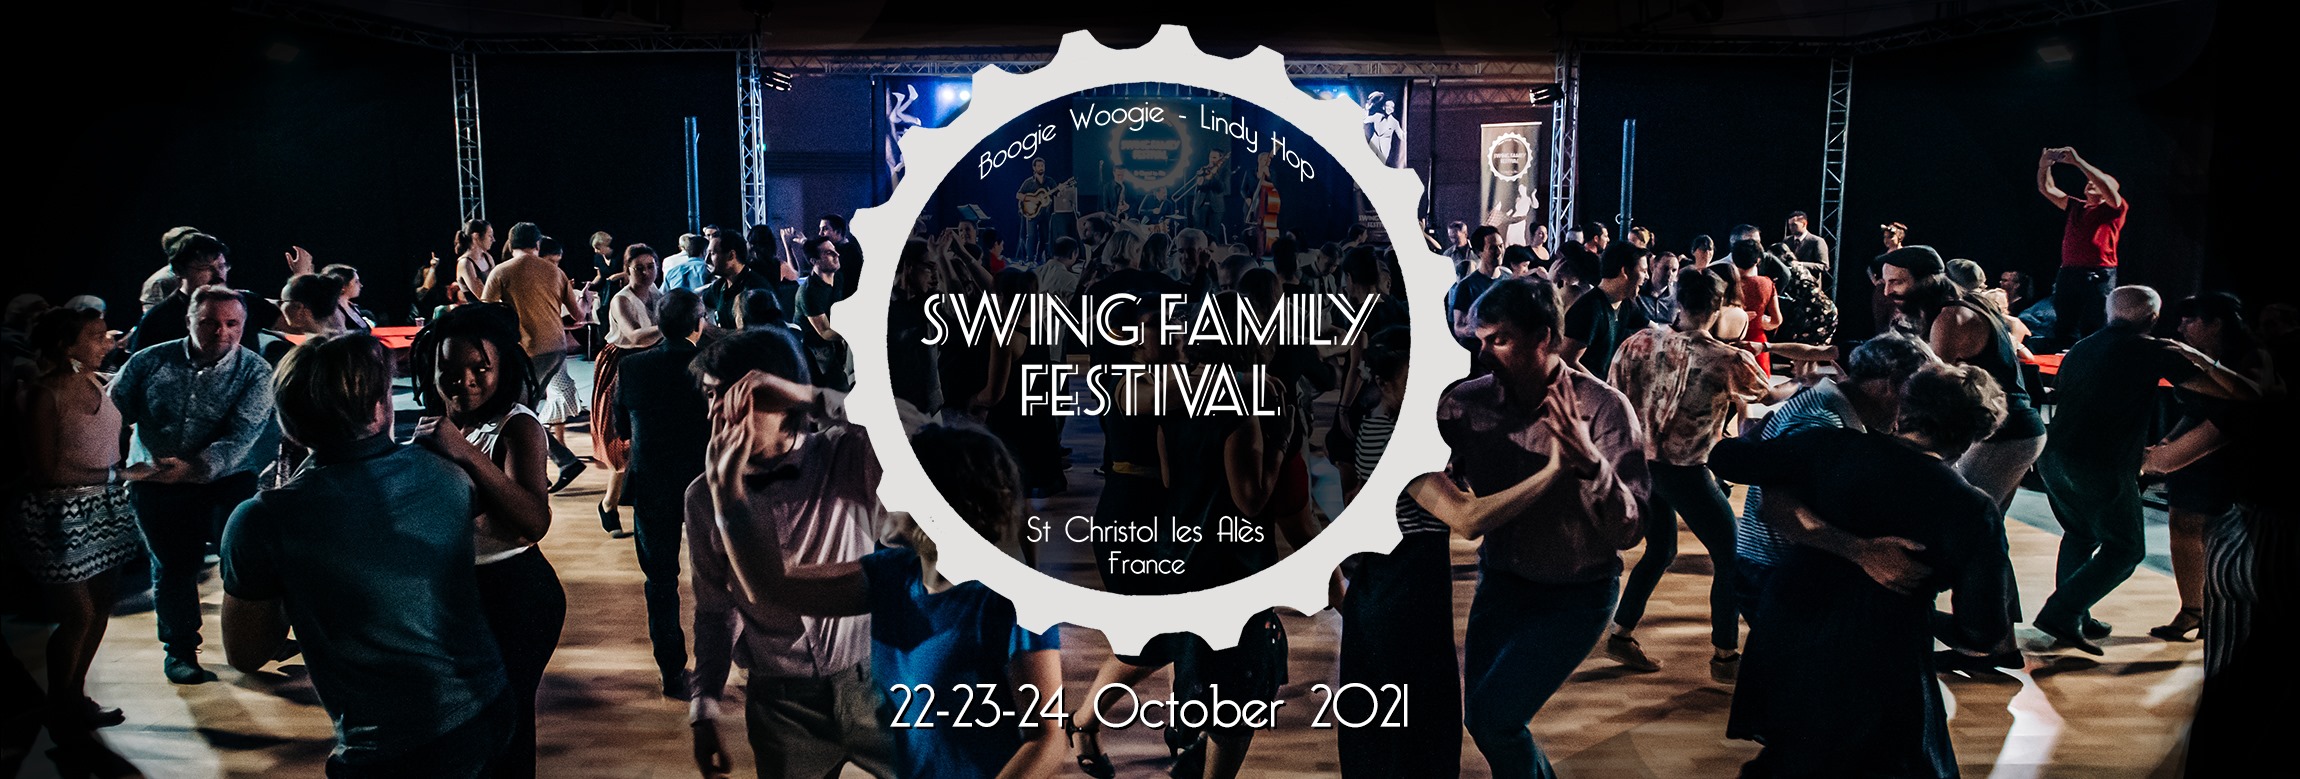 Swing Family Festival 5 eme Edition